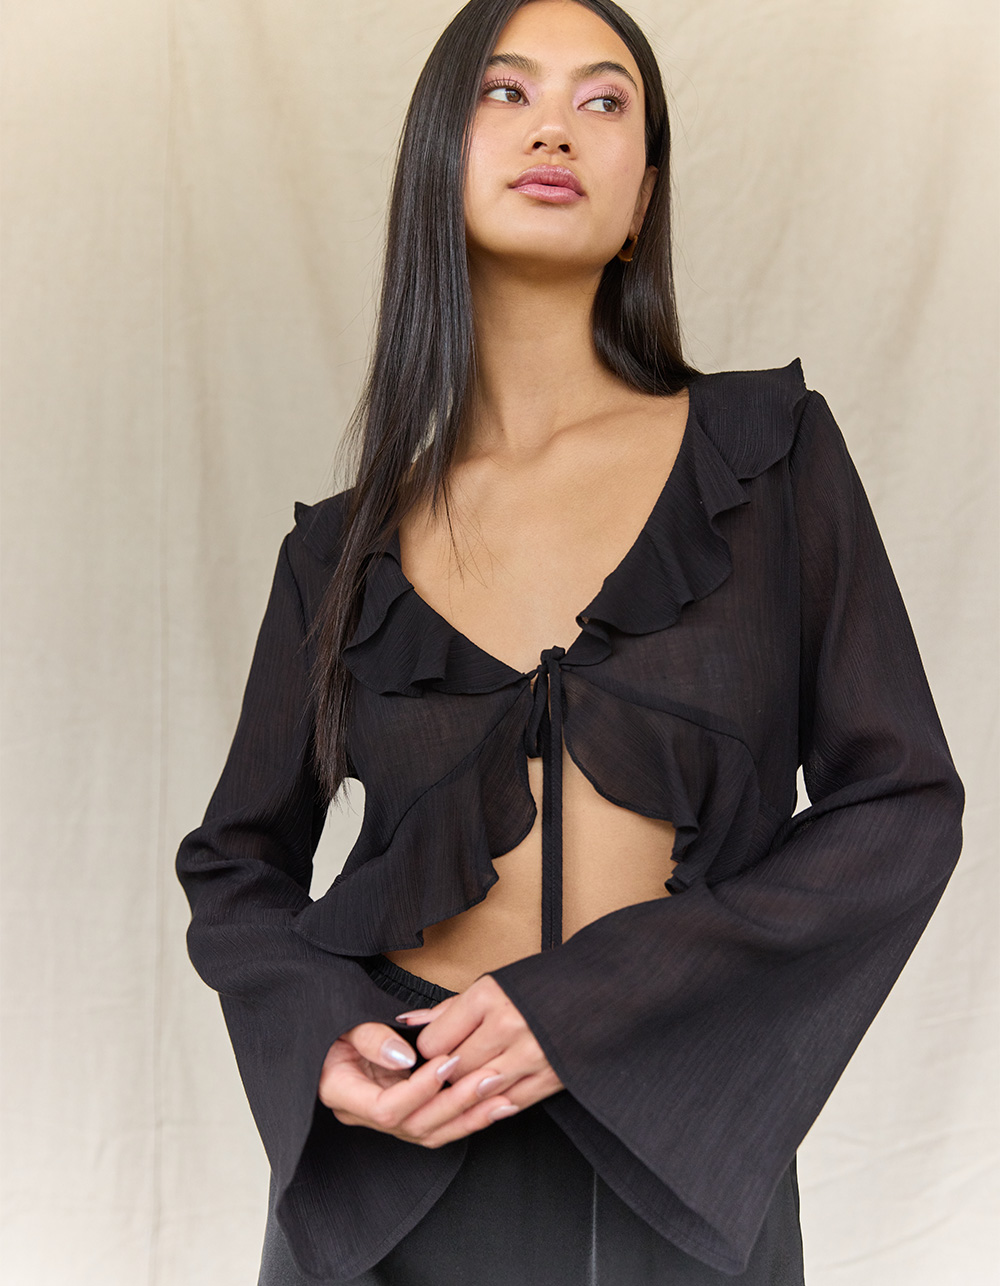 WEST OF MELROSE Sheer Ruffle Womens Long Sleeve Top - BLACK